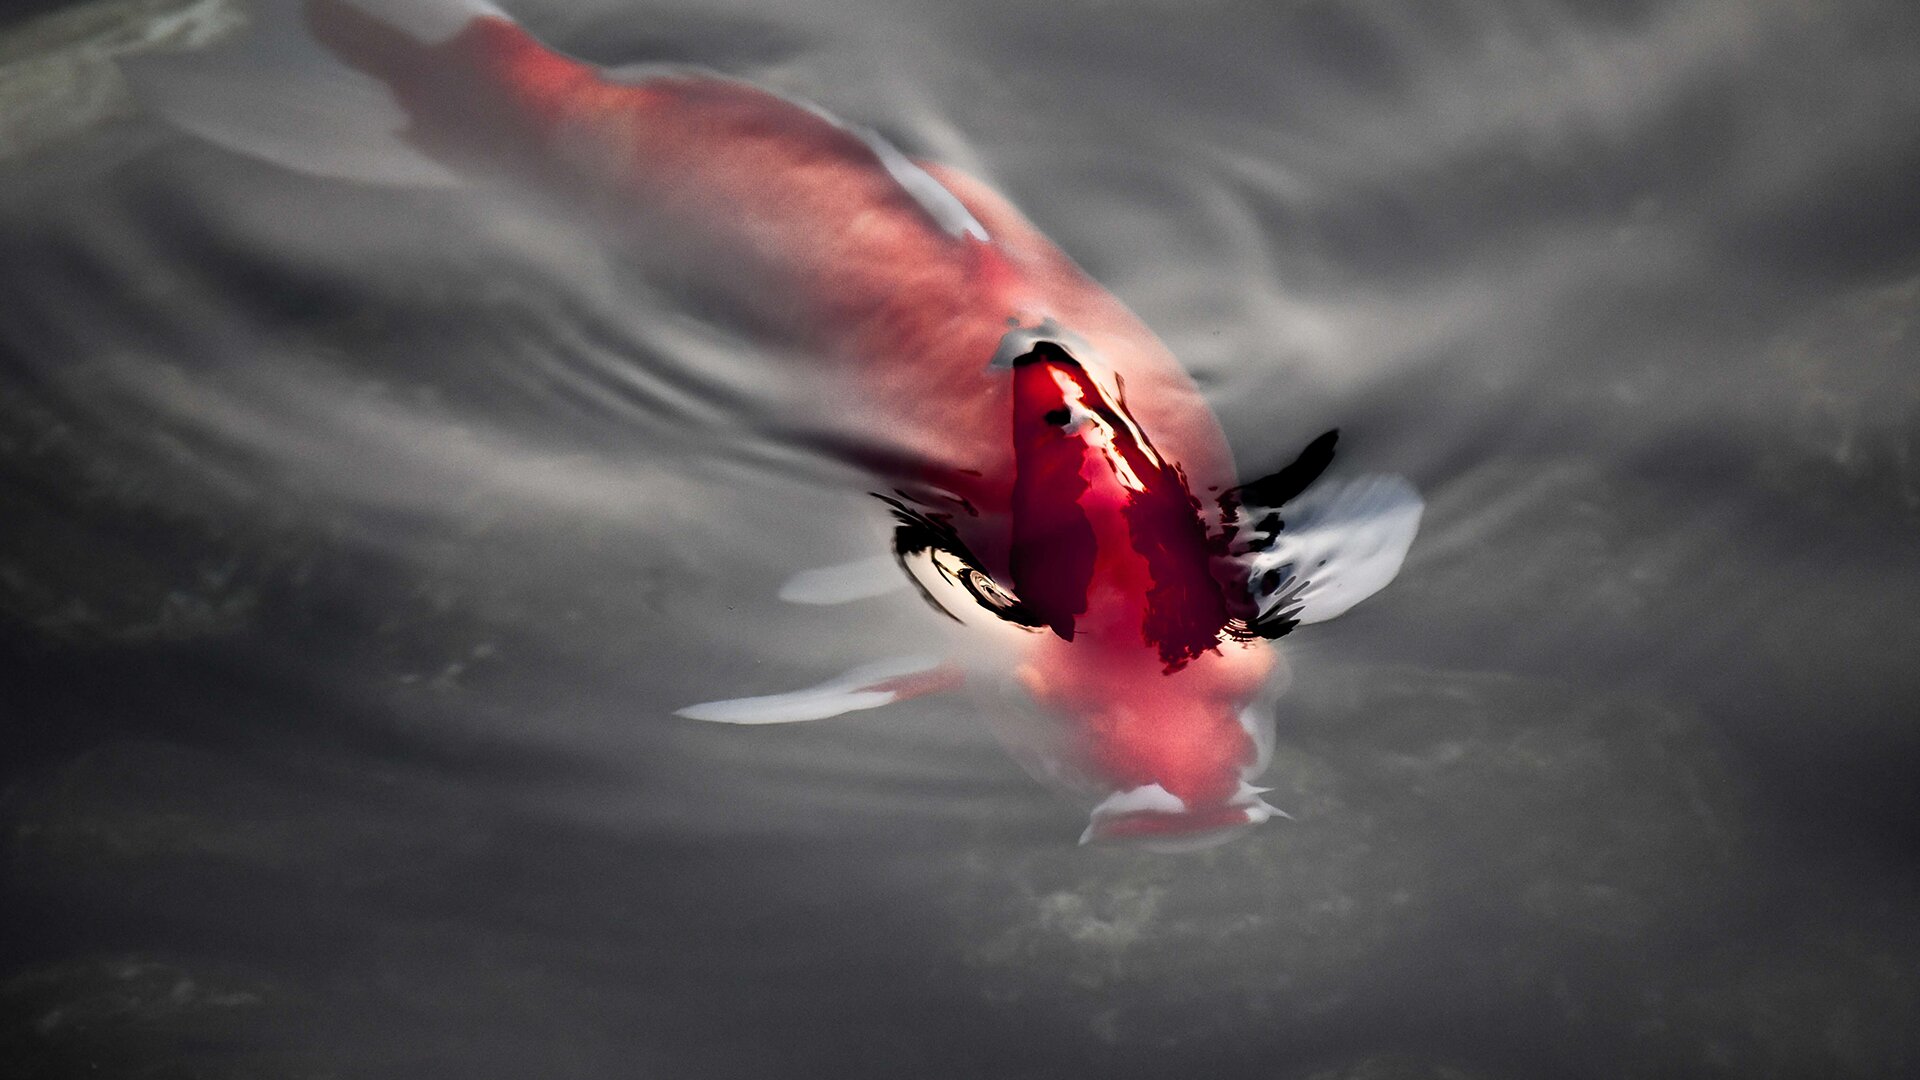 A koi fish swimming in water